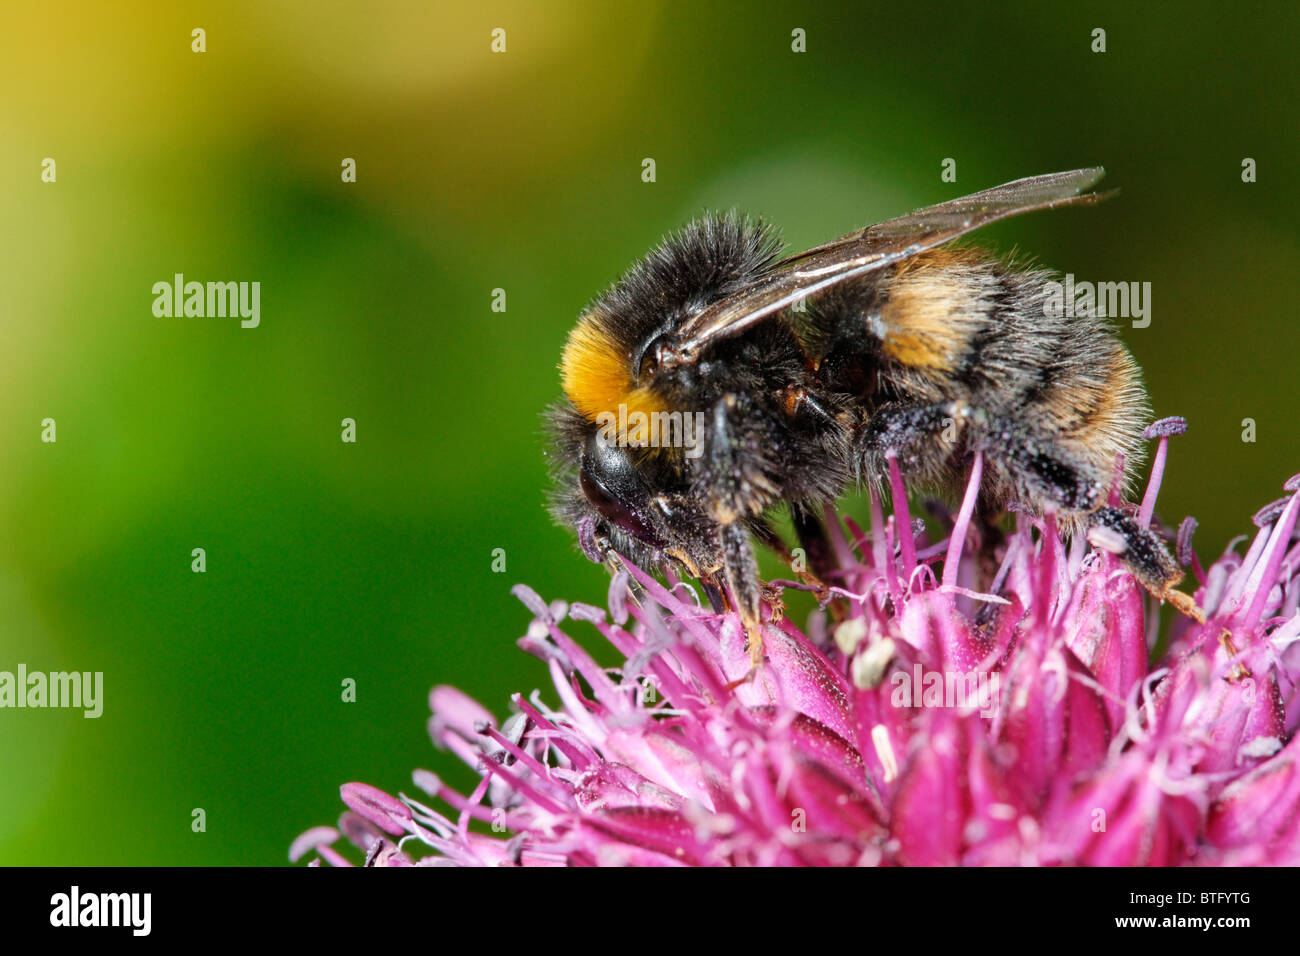 Un abejorro Allium alimentarse de una flor. Foto de stock